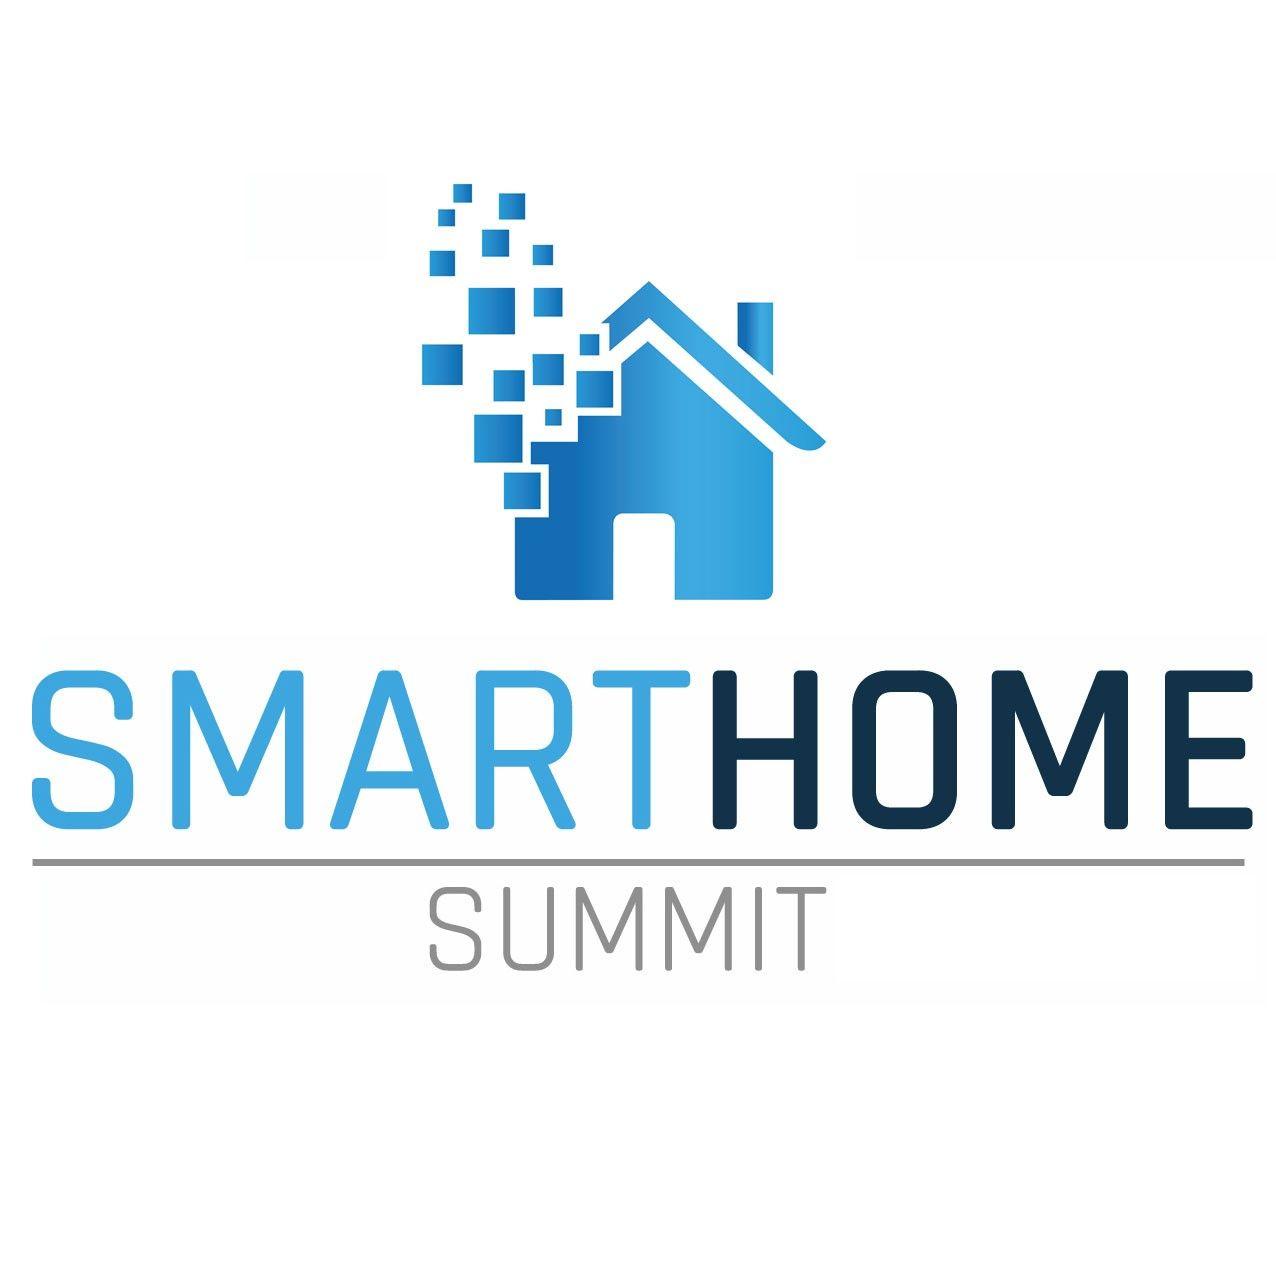 Smart House Logo - Smart home summit - Unusual house design